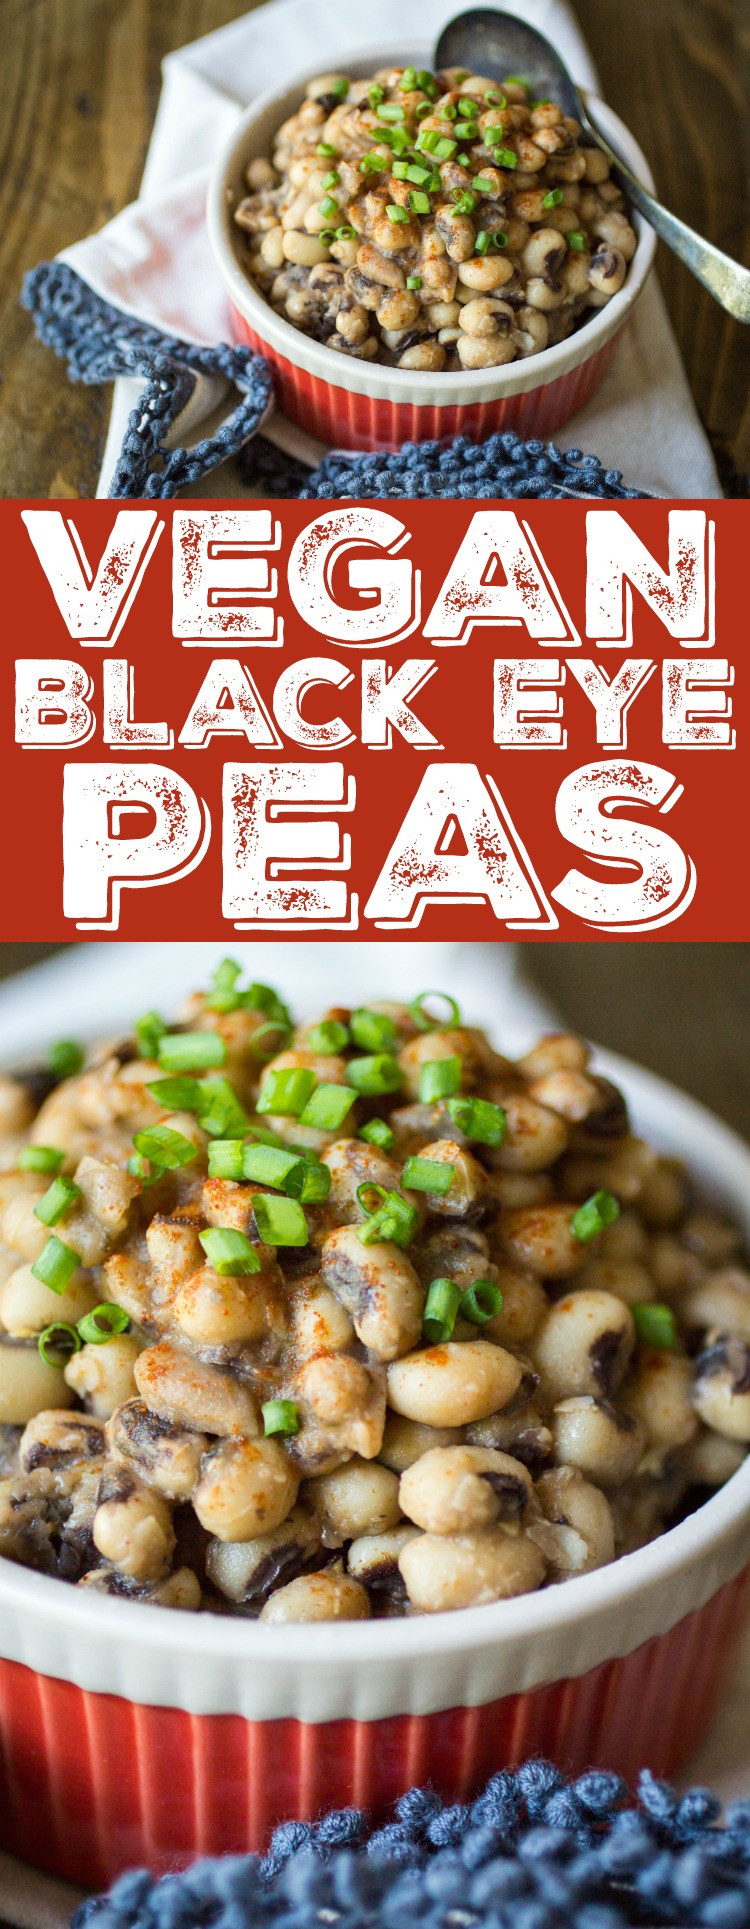 Vegan Black Eyed Pea Recipes
 black eyed peas recipes ve arian